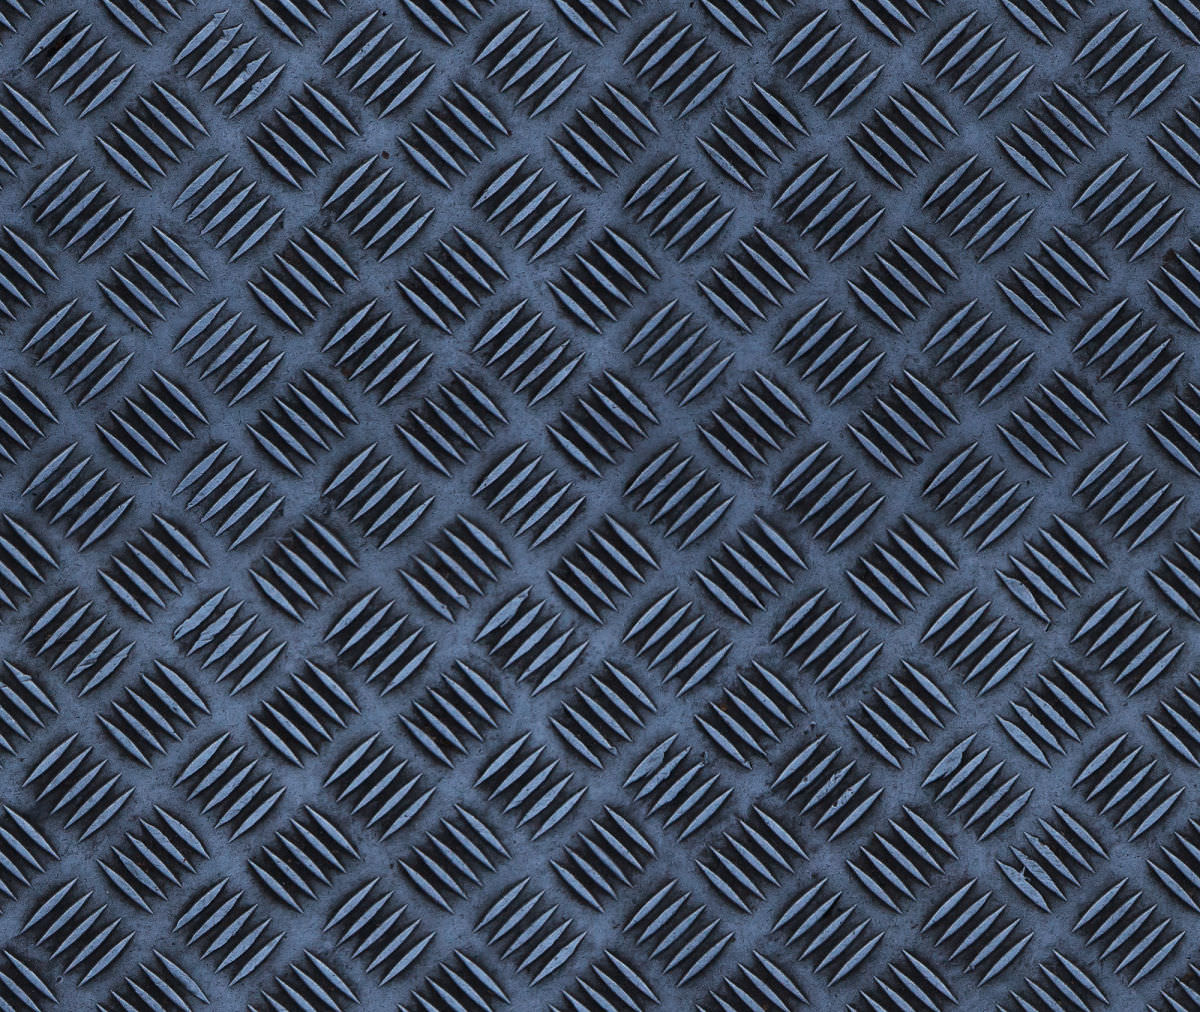 Seamless Checkerplate Anti-Slip Metal Floor Texture